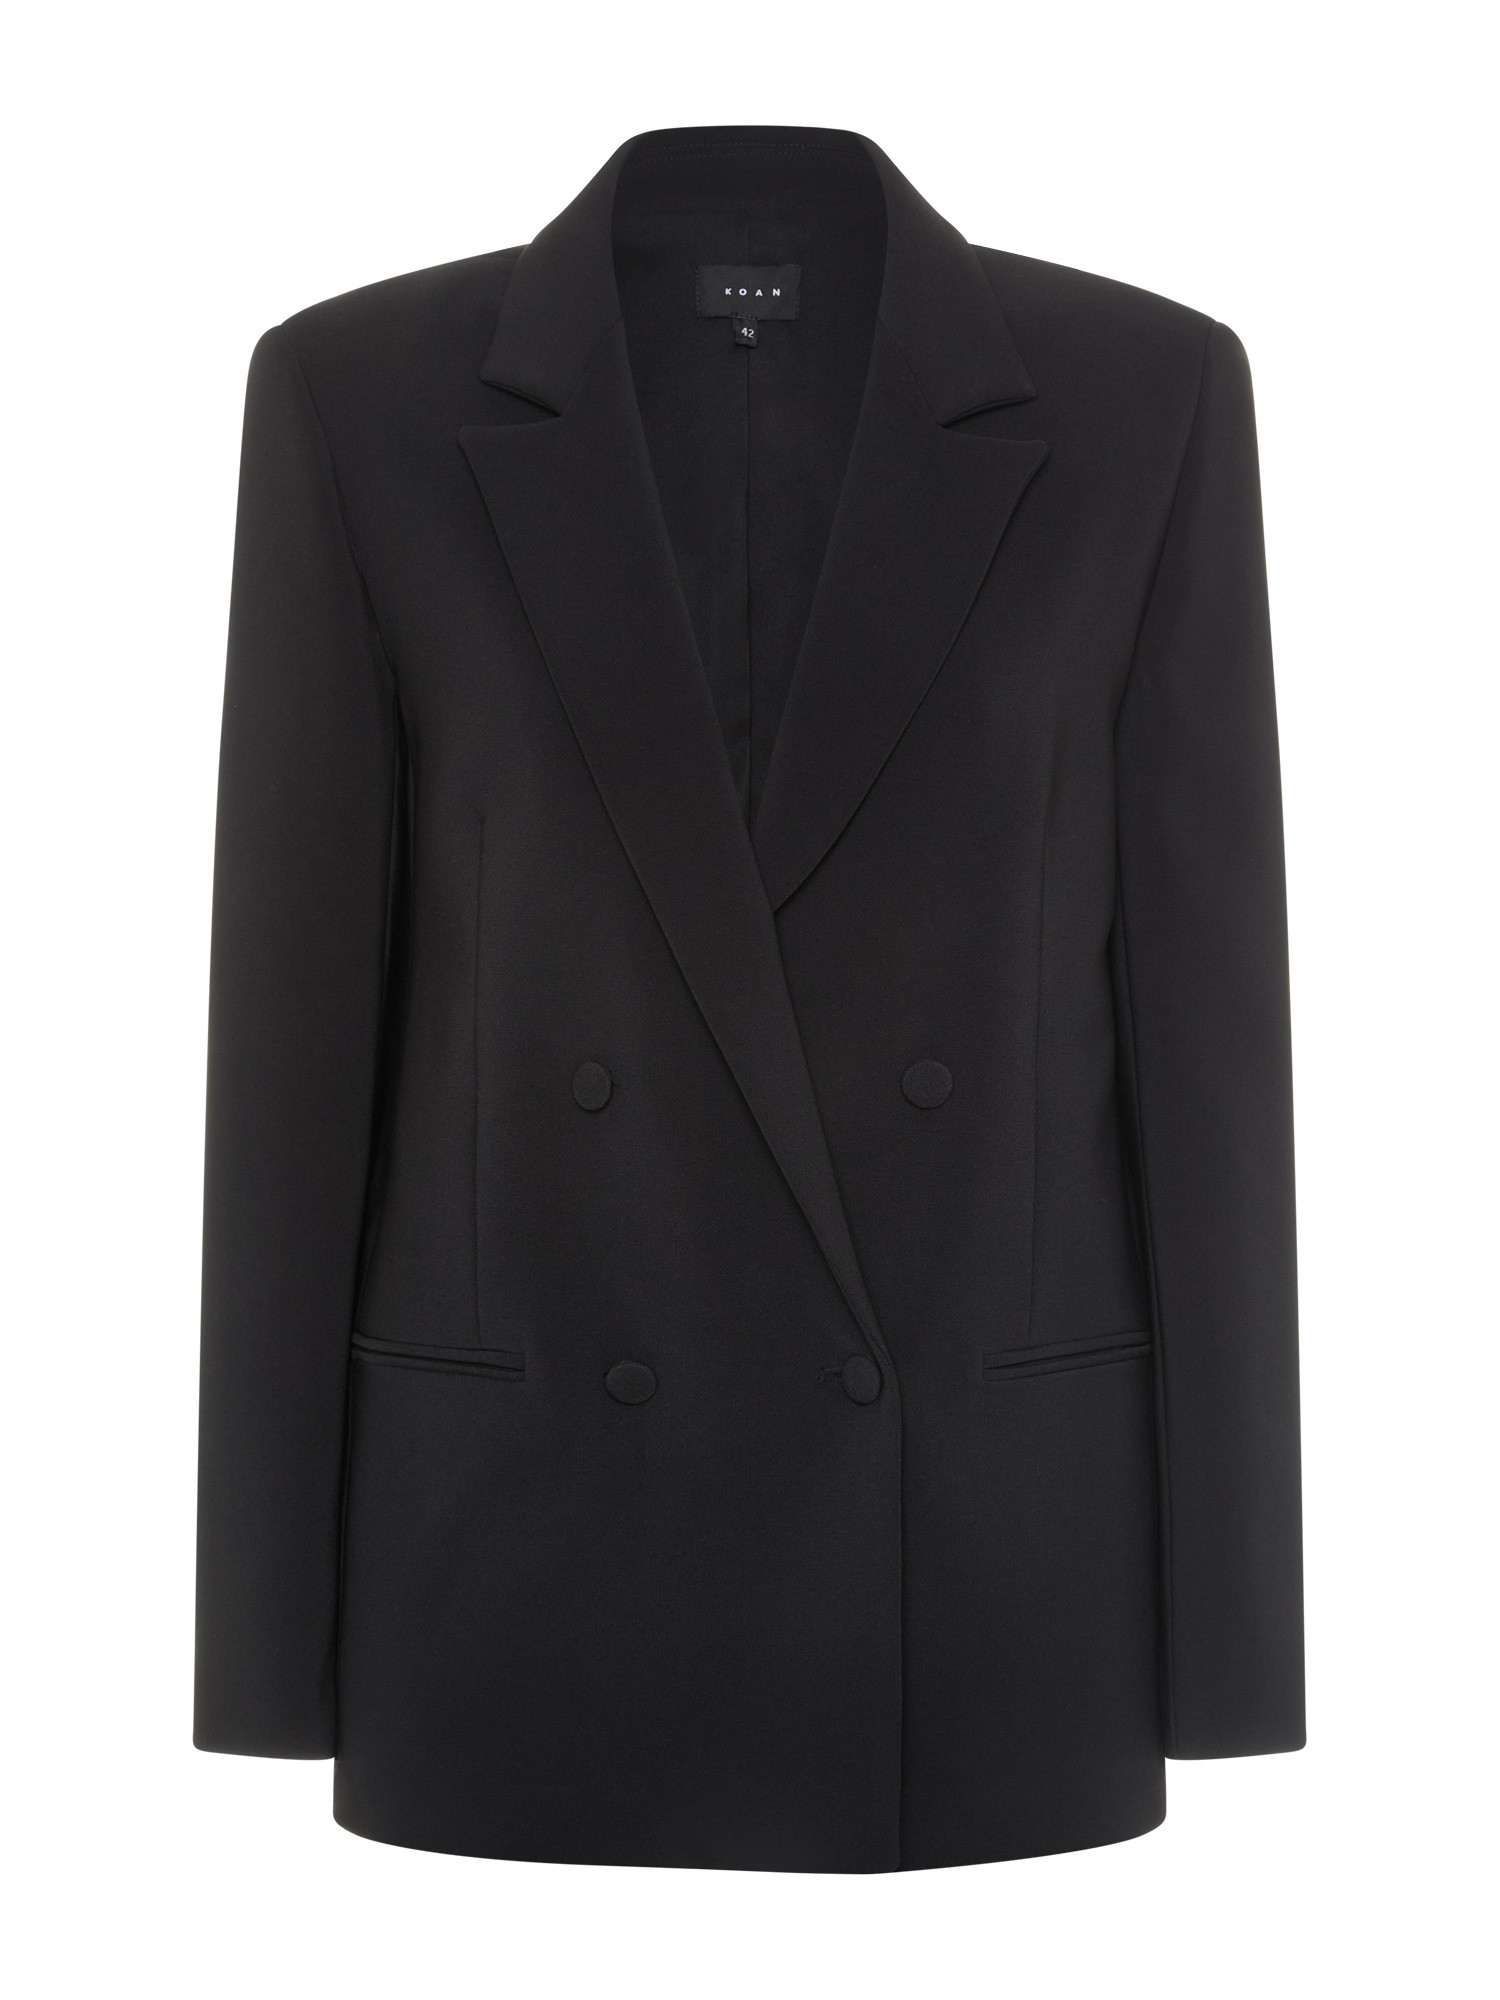 Koan - Double-breasted jacket, Black, large image number 0